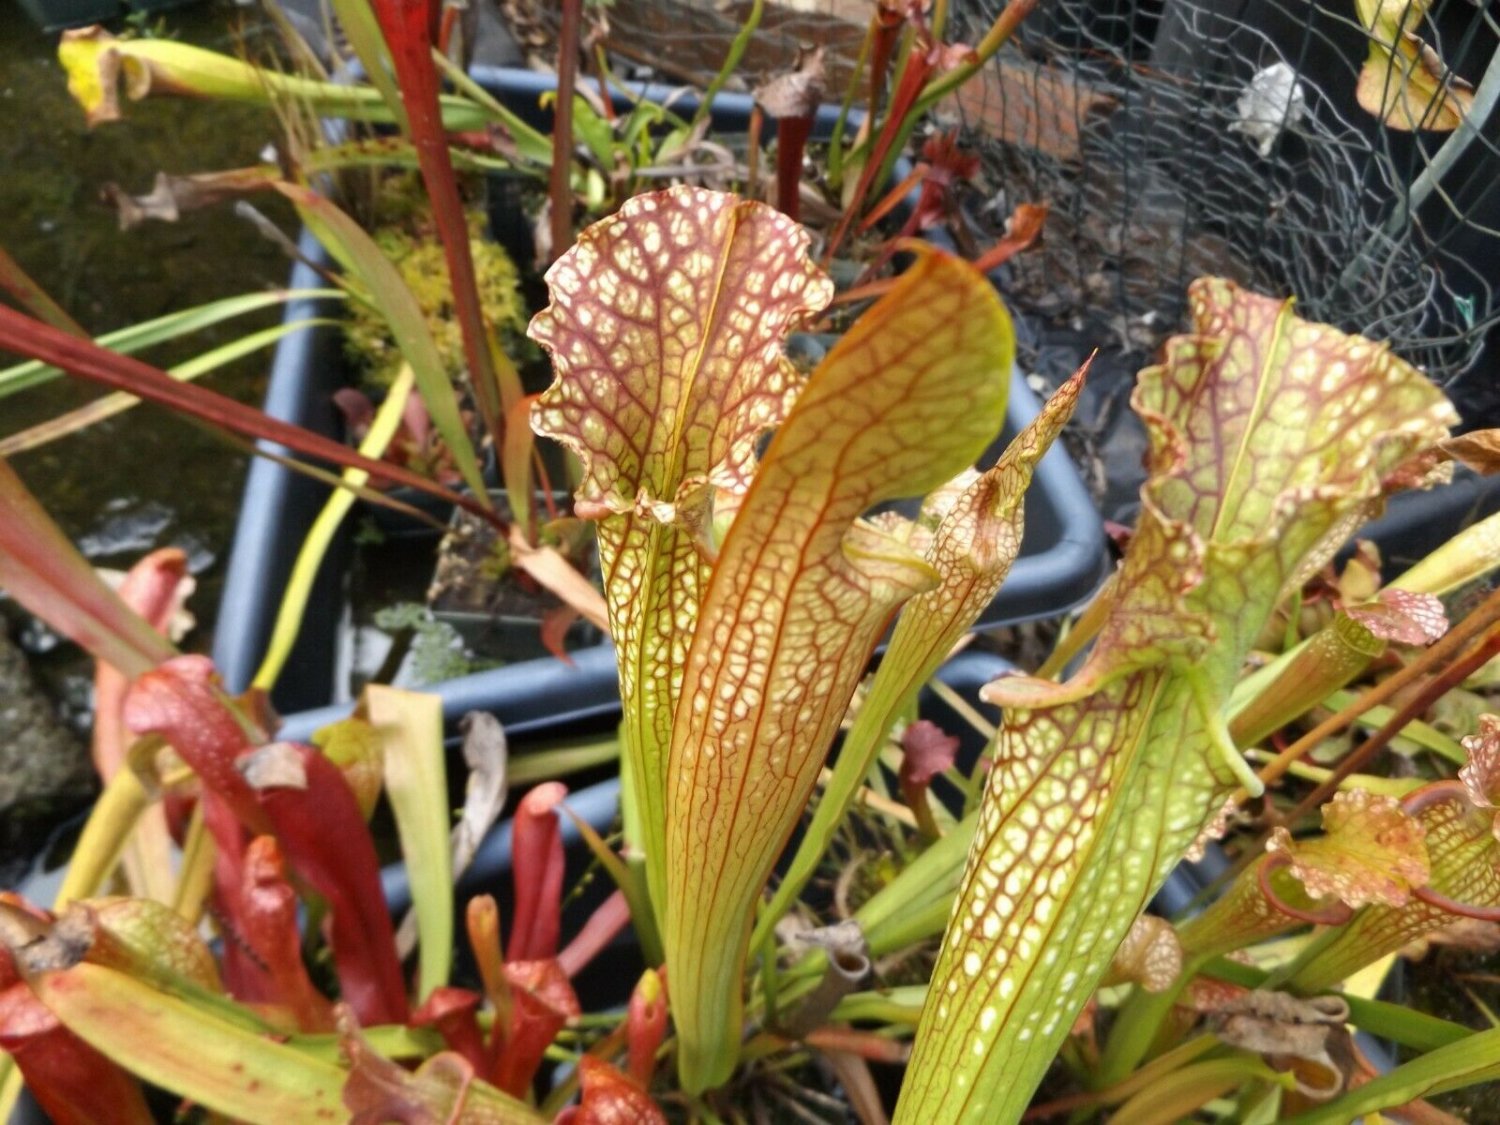 Red Velvet carnivorous sarracenia plant